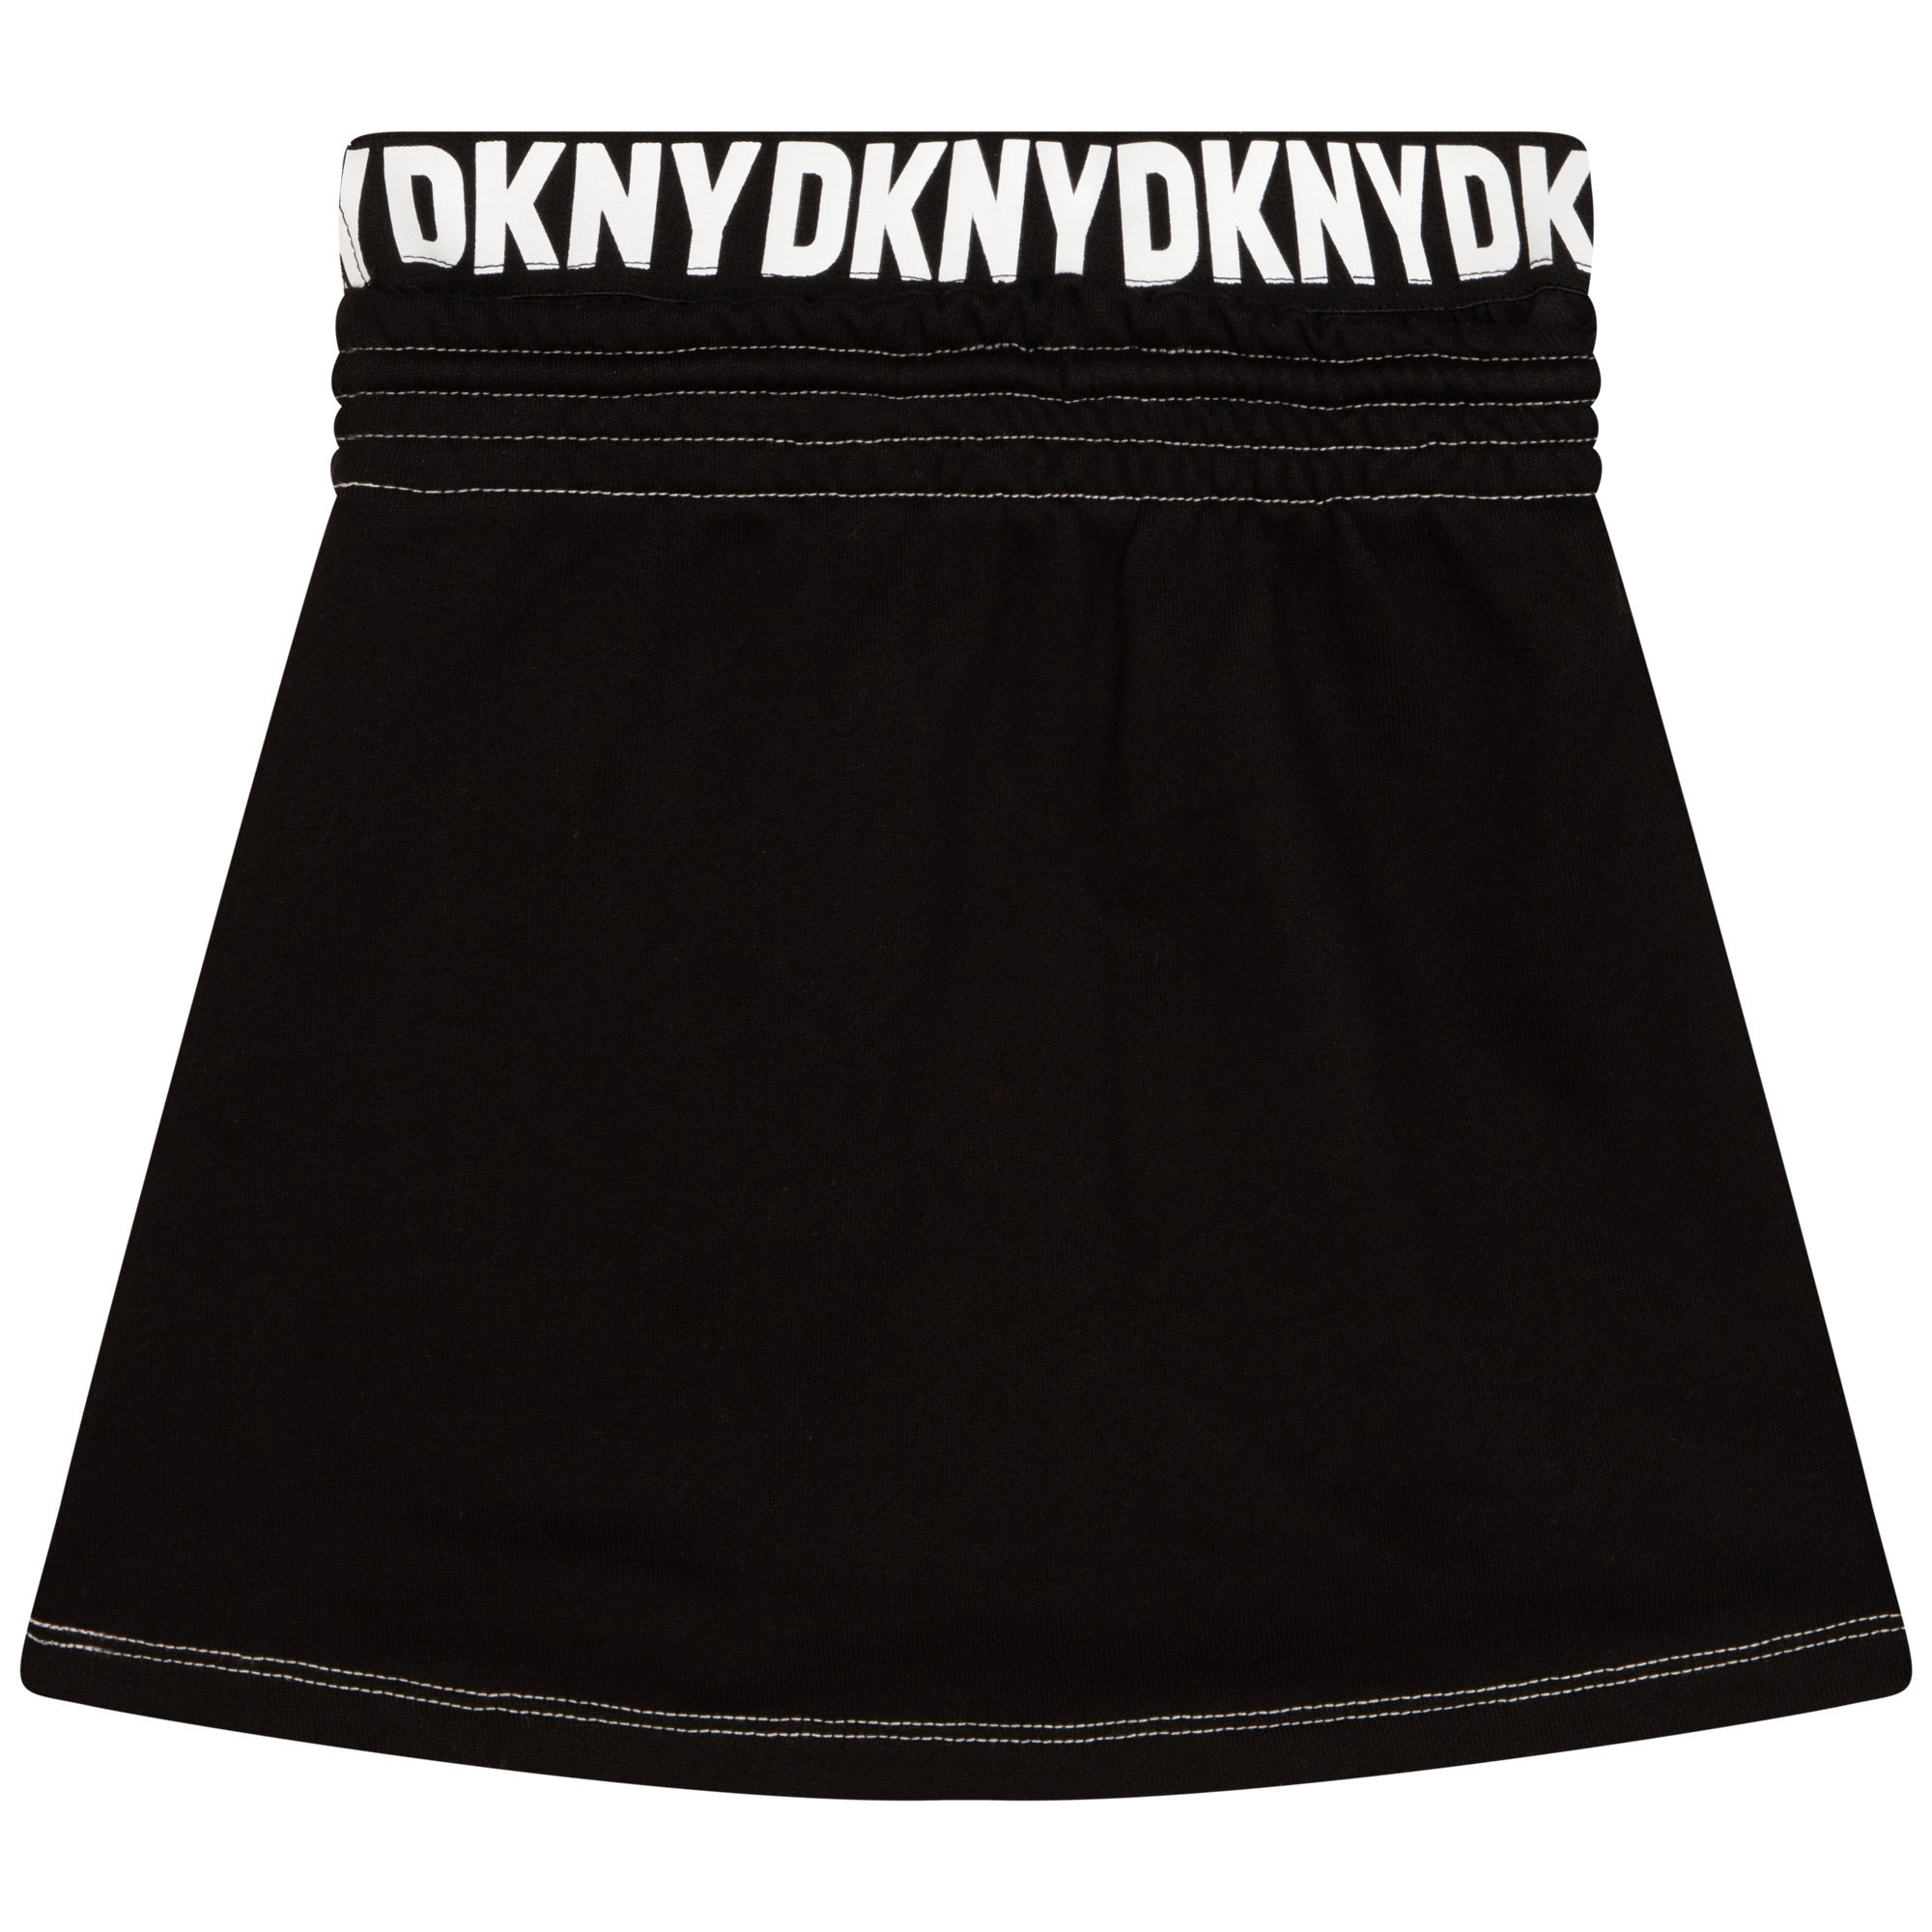 Gonna felpata con logo DKNY Per BAMBINA